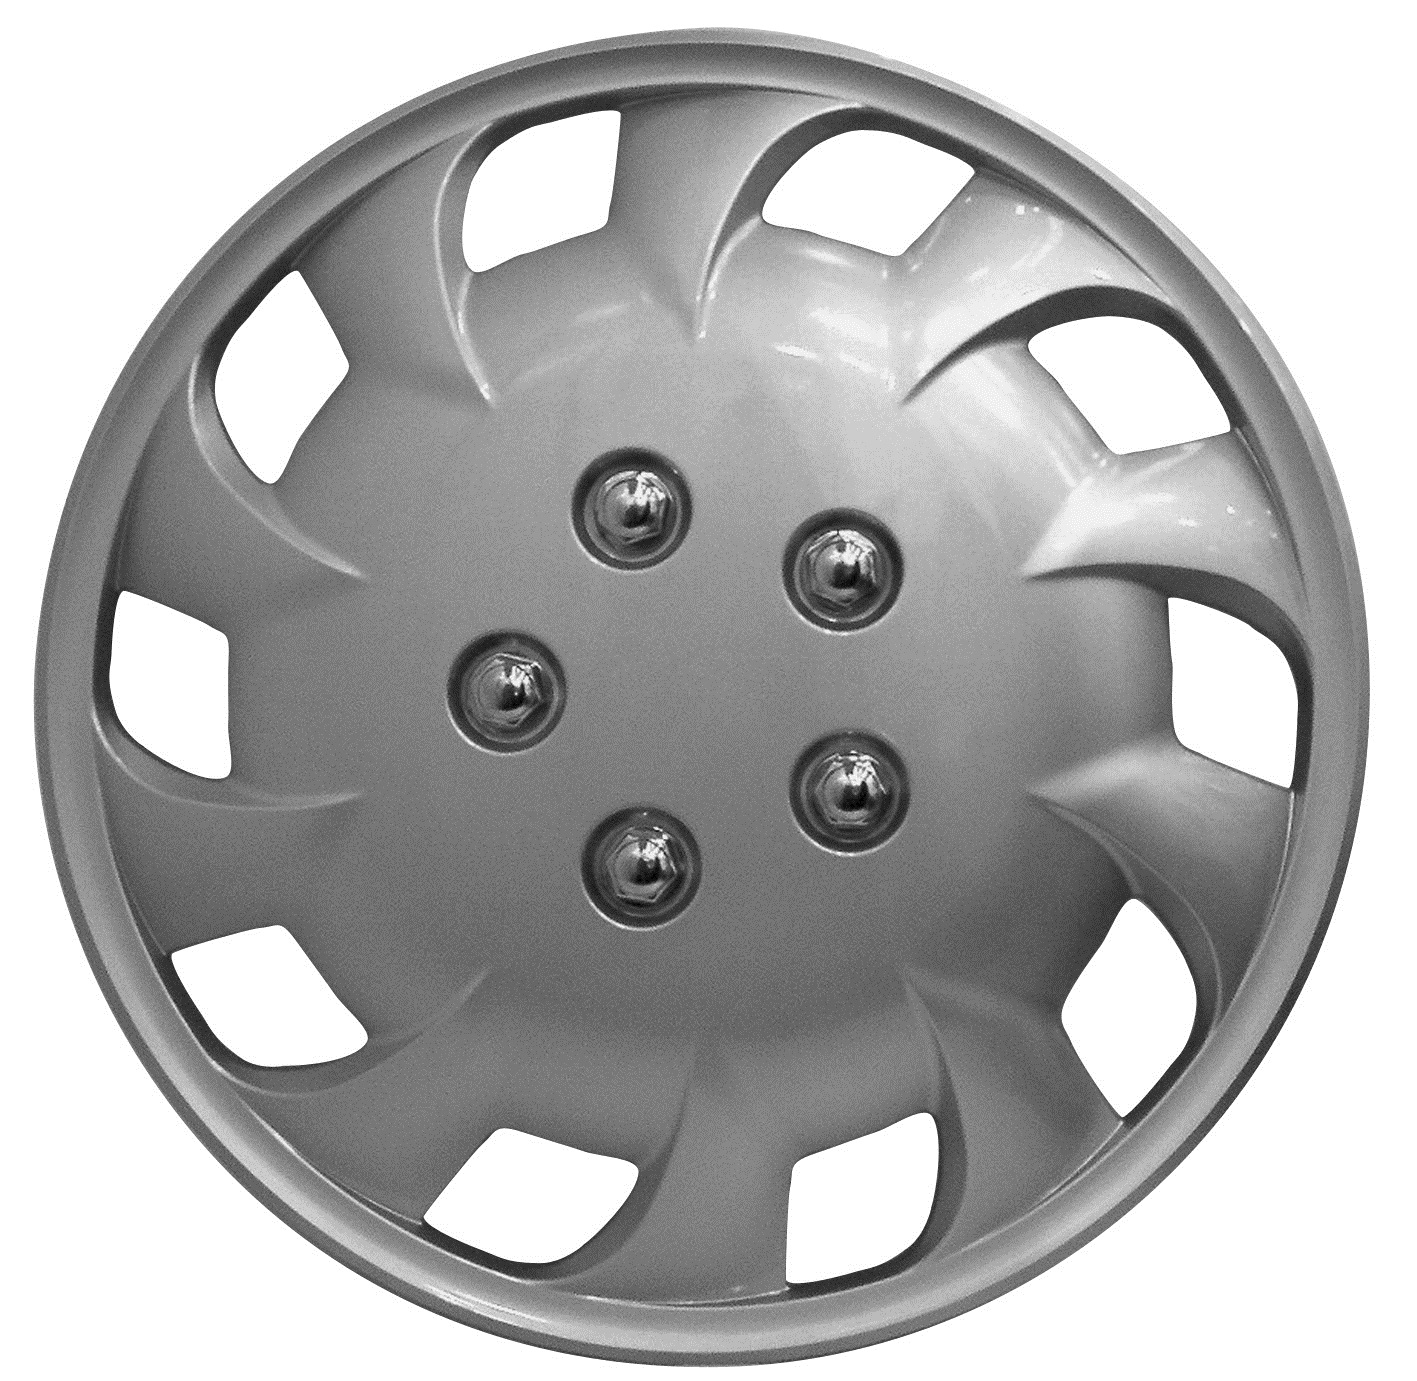 Details about Streetwize Mercury 14 Inch Wheel Trim Set Silver Set of 4 Hub Caps Covers 14